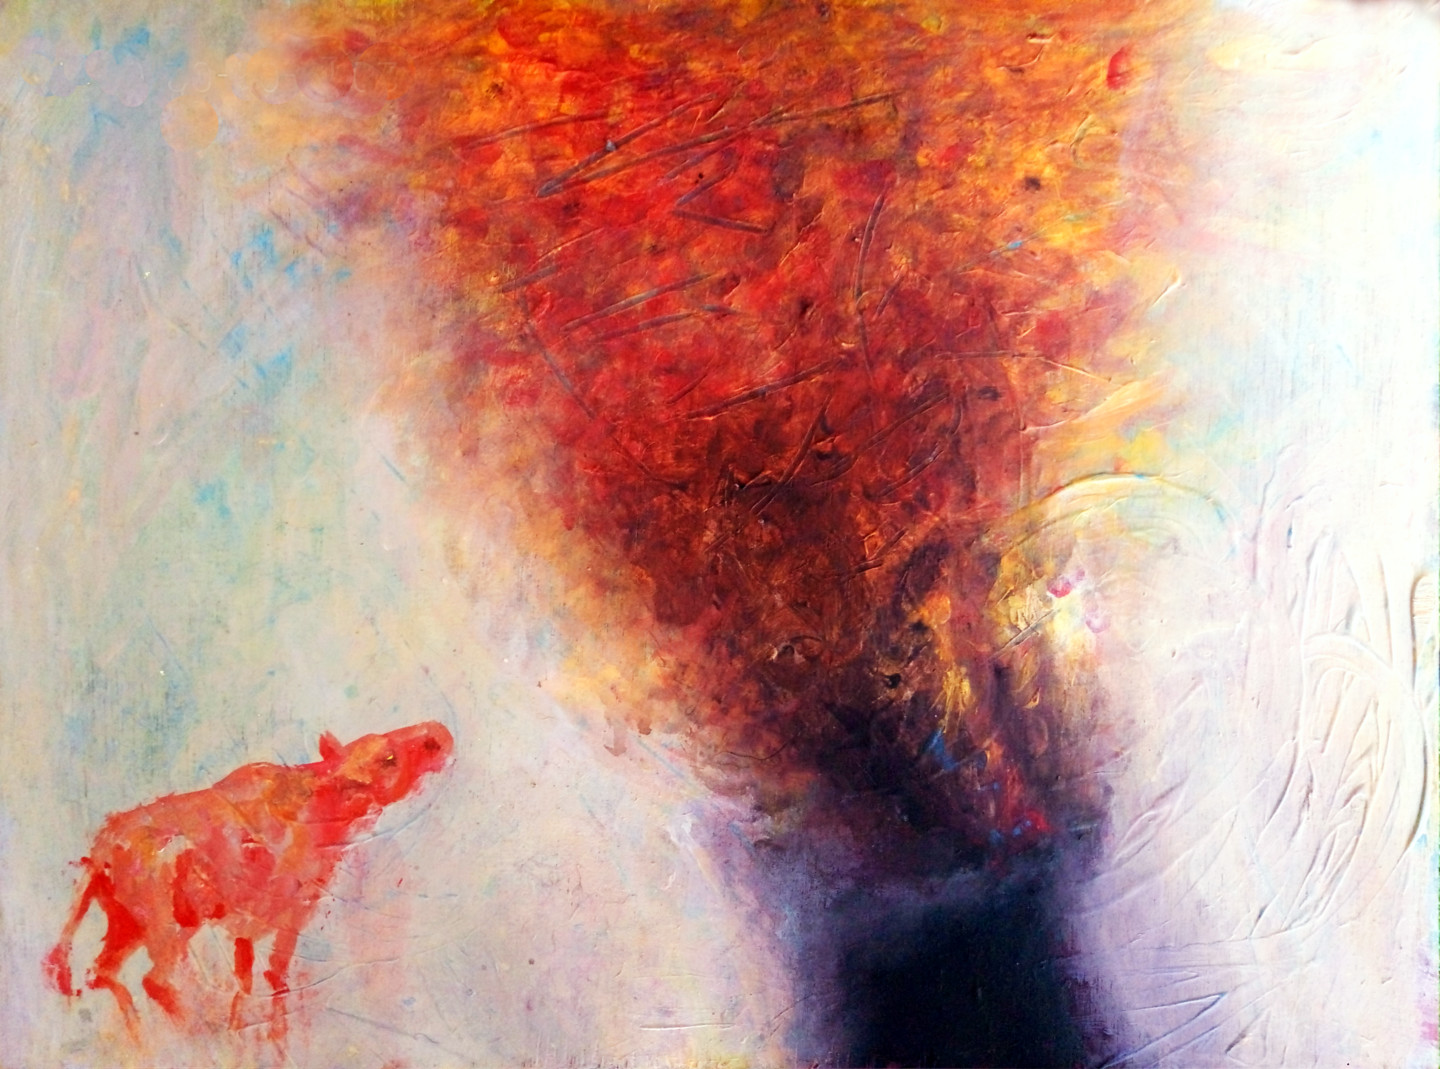 Zenya Gorlik - "The Red Cow Looks at Volcanic Eruption"